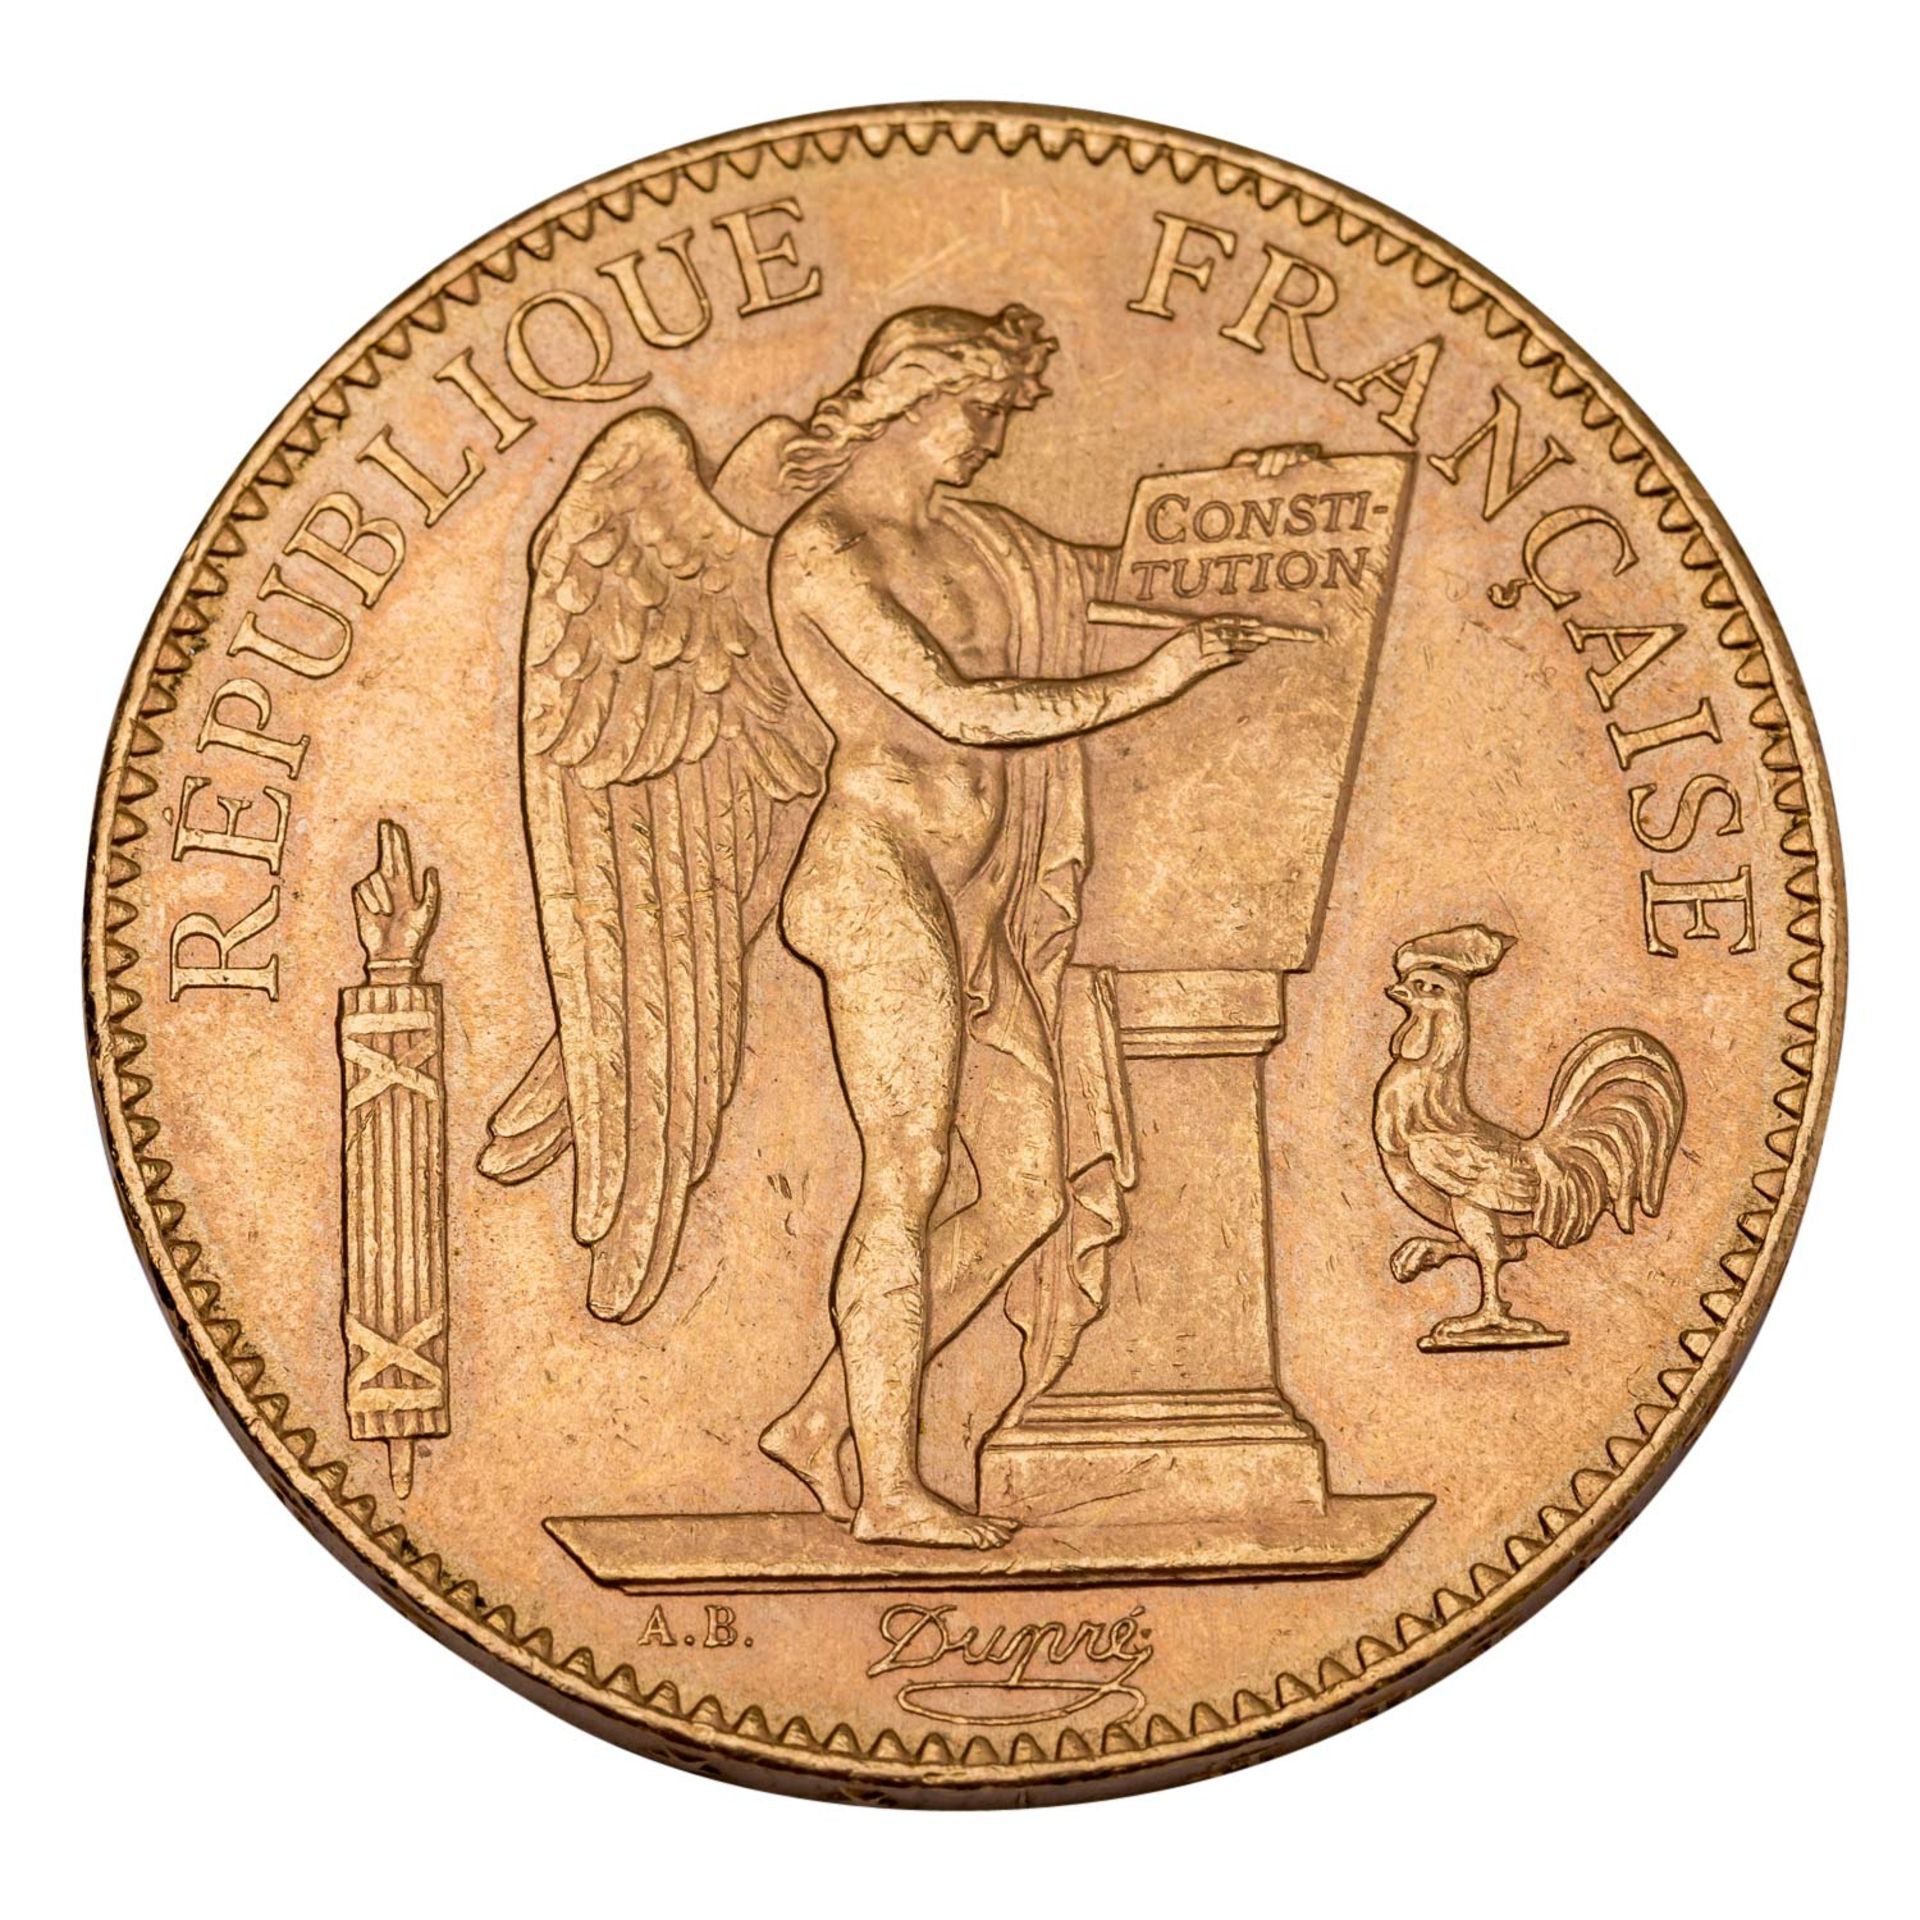 Frankreich - 100 Francs 1912/A, GOLD, - Image 2 of 2